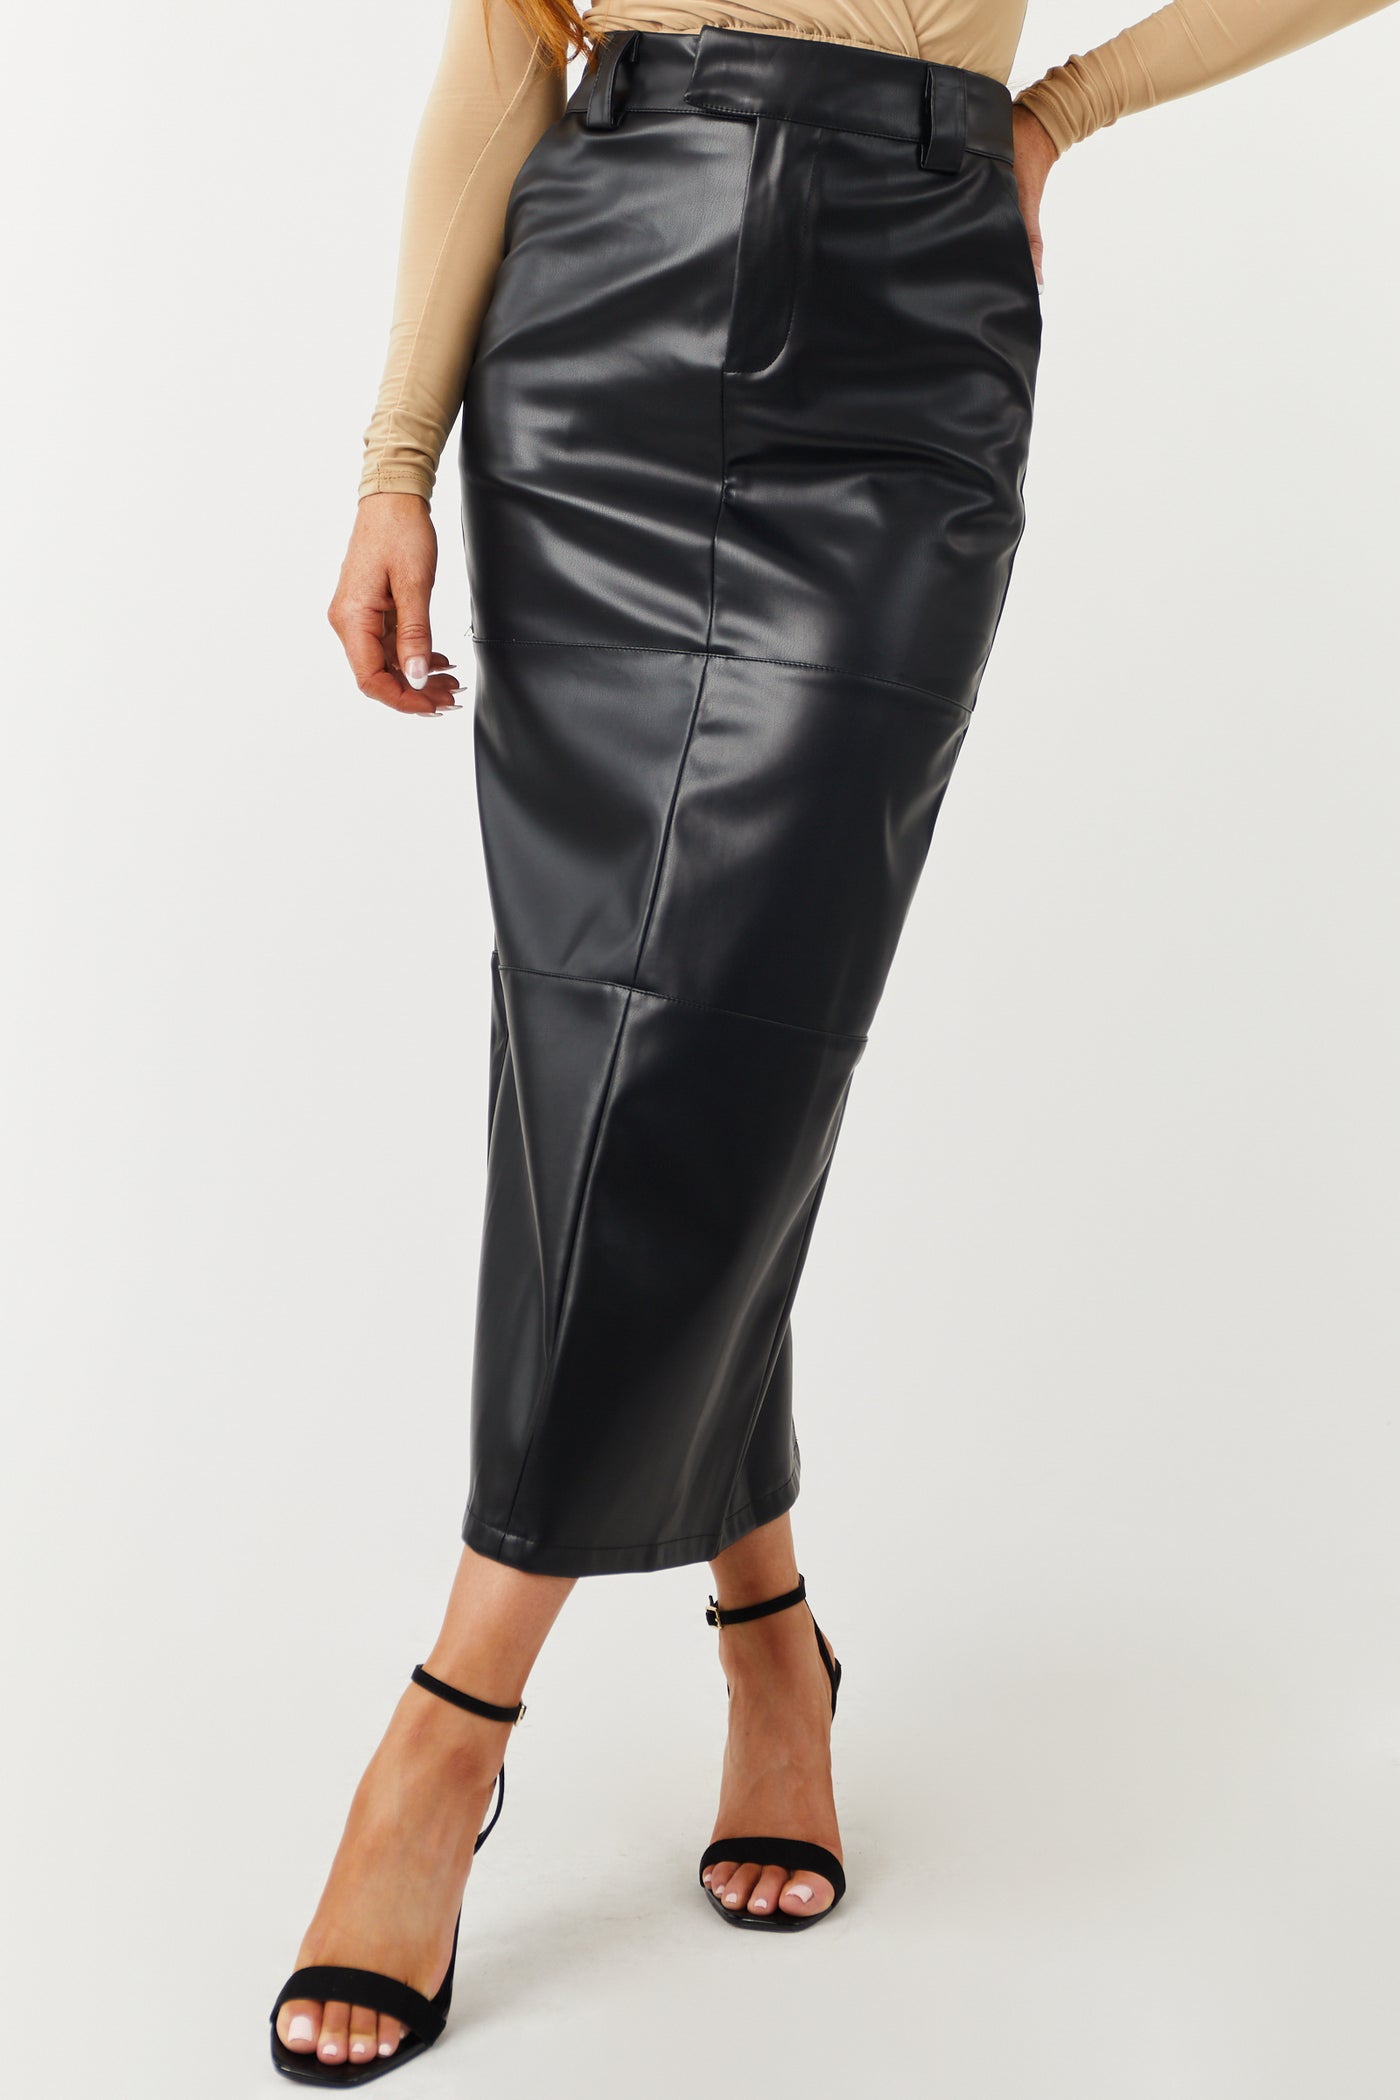 Faux leather midi skirt black  Trendy Skirts - Lush Fashion Lounge